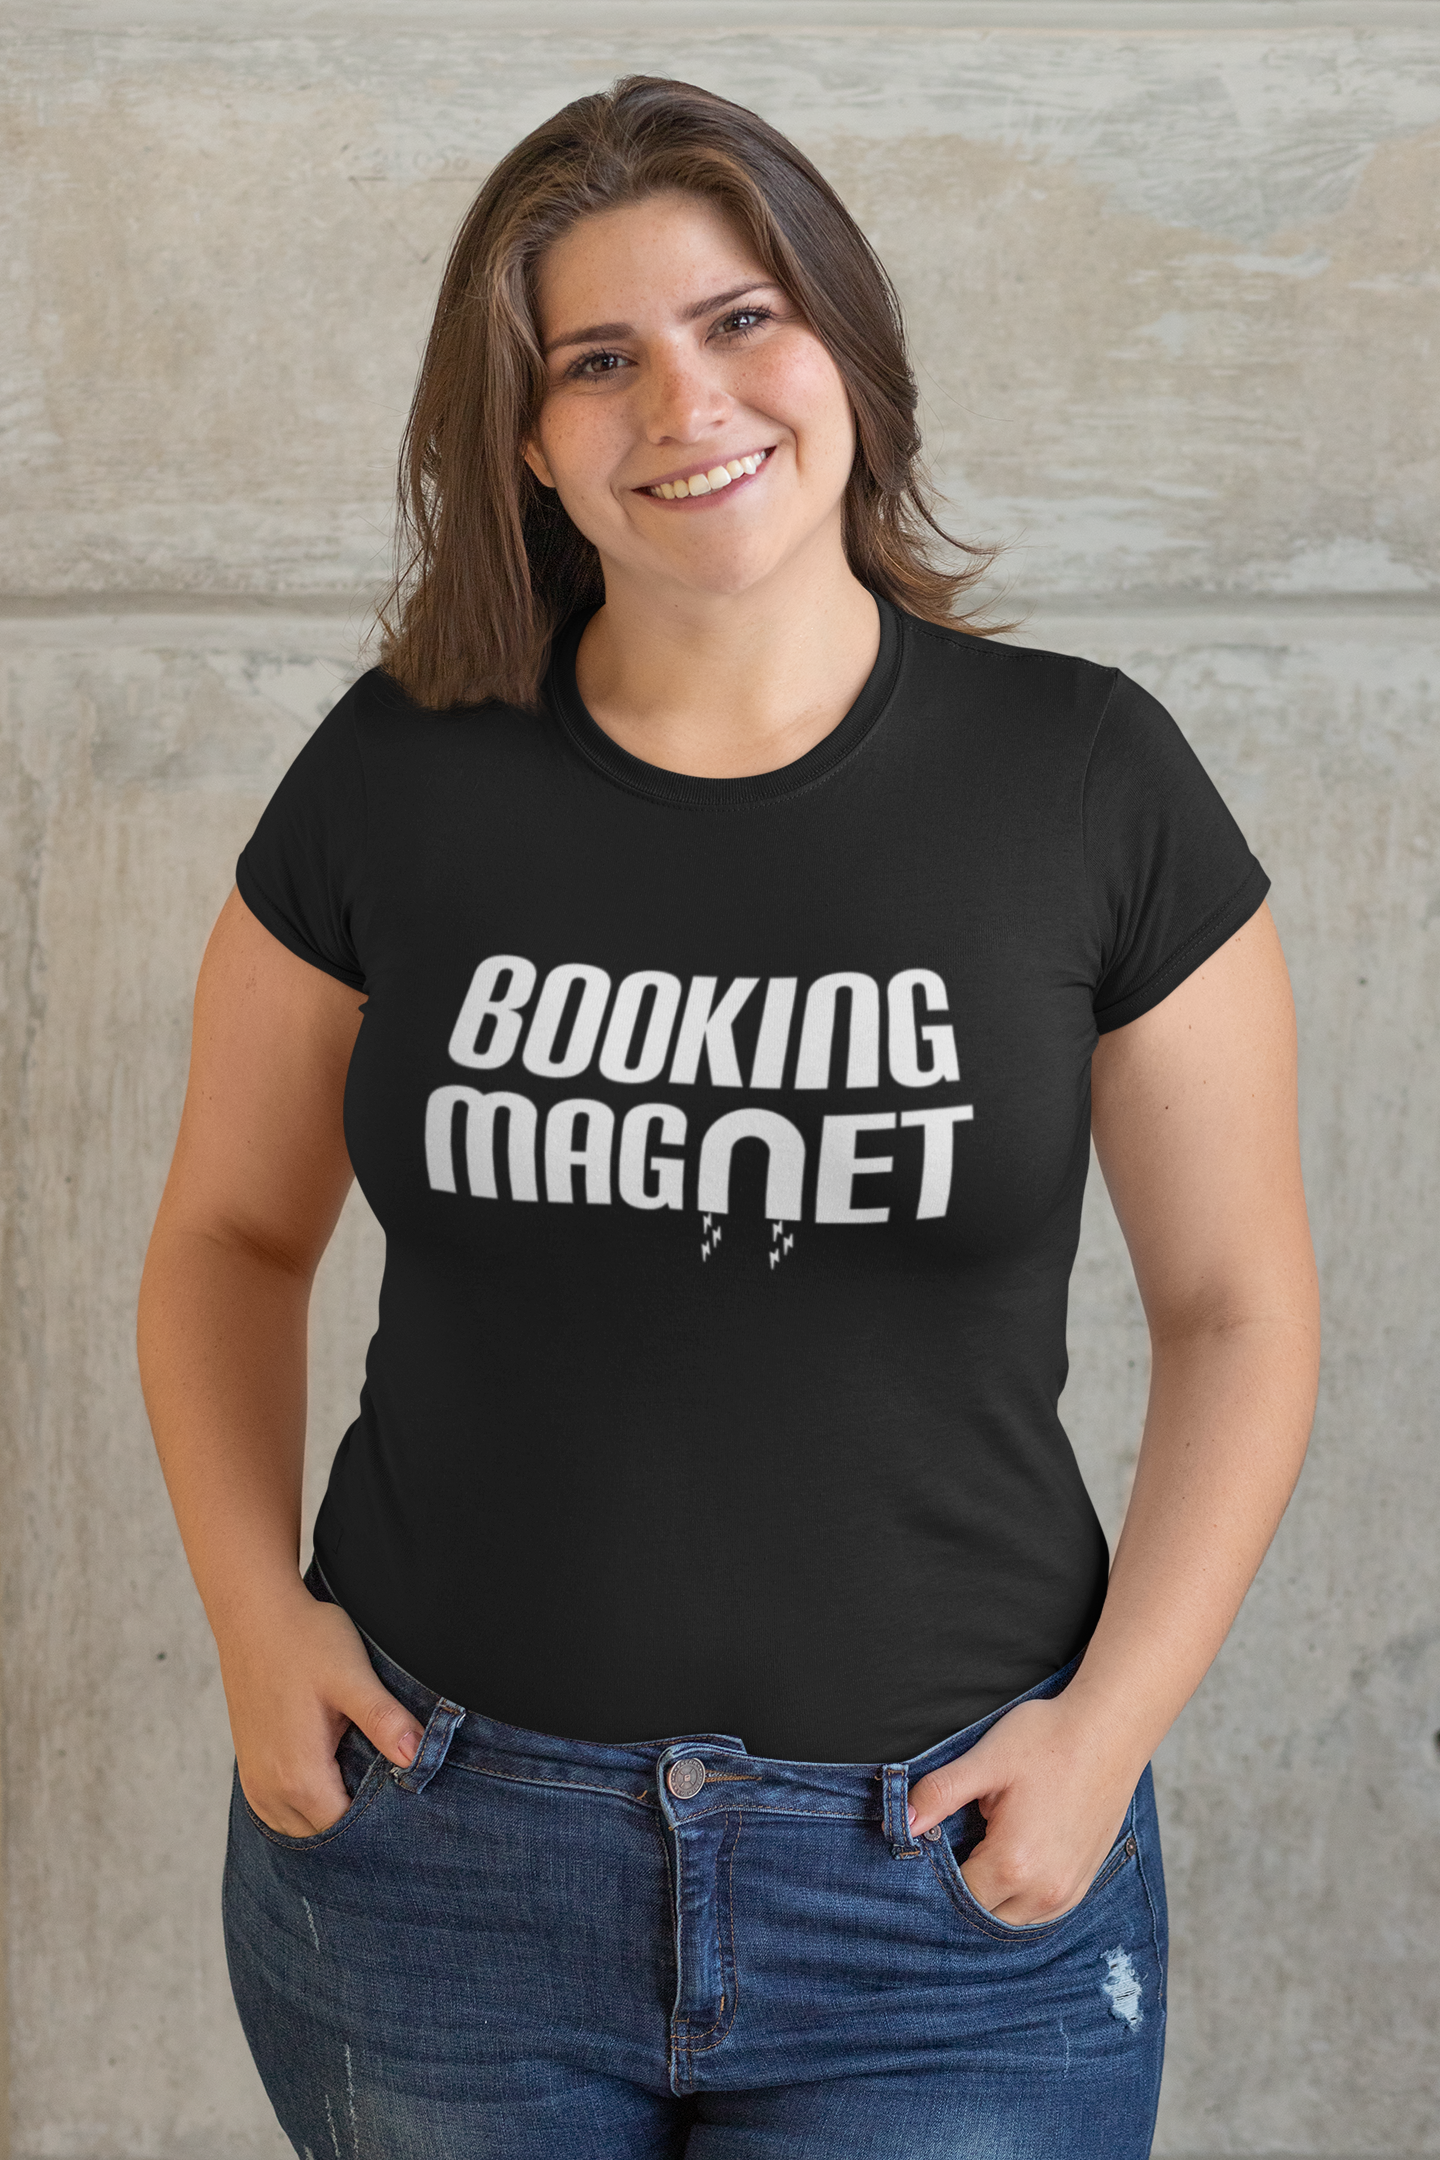 Booking Magnet - Black Unisex T-Shirt